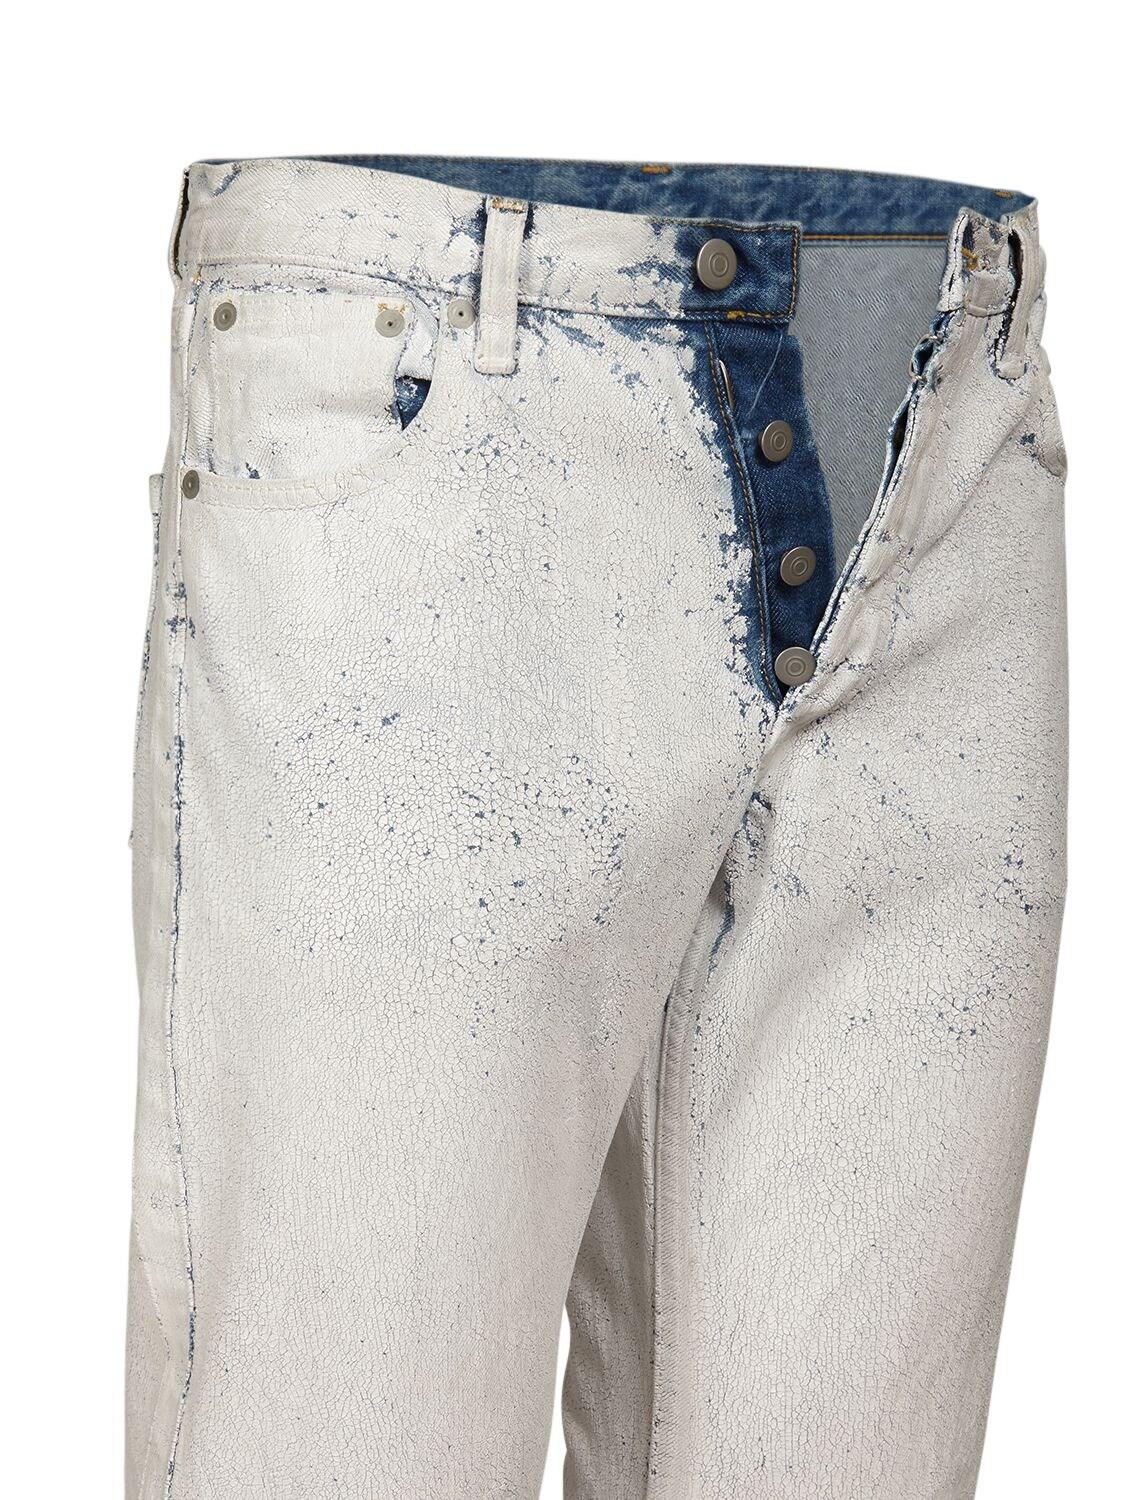 Maison Margiela Cracked Paint Cotton Denim Jeans in White for Men